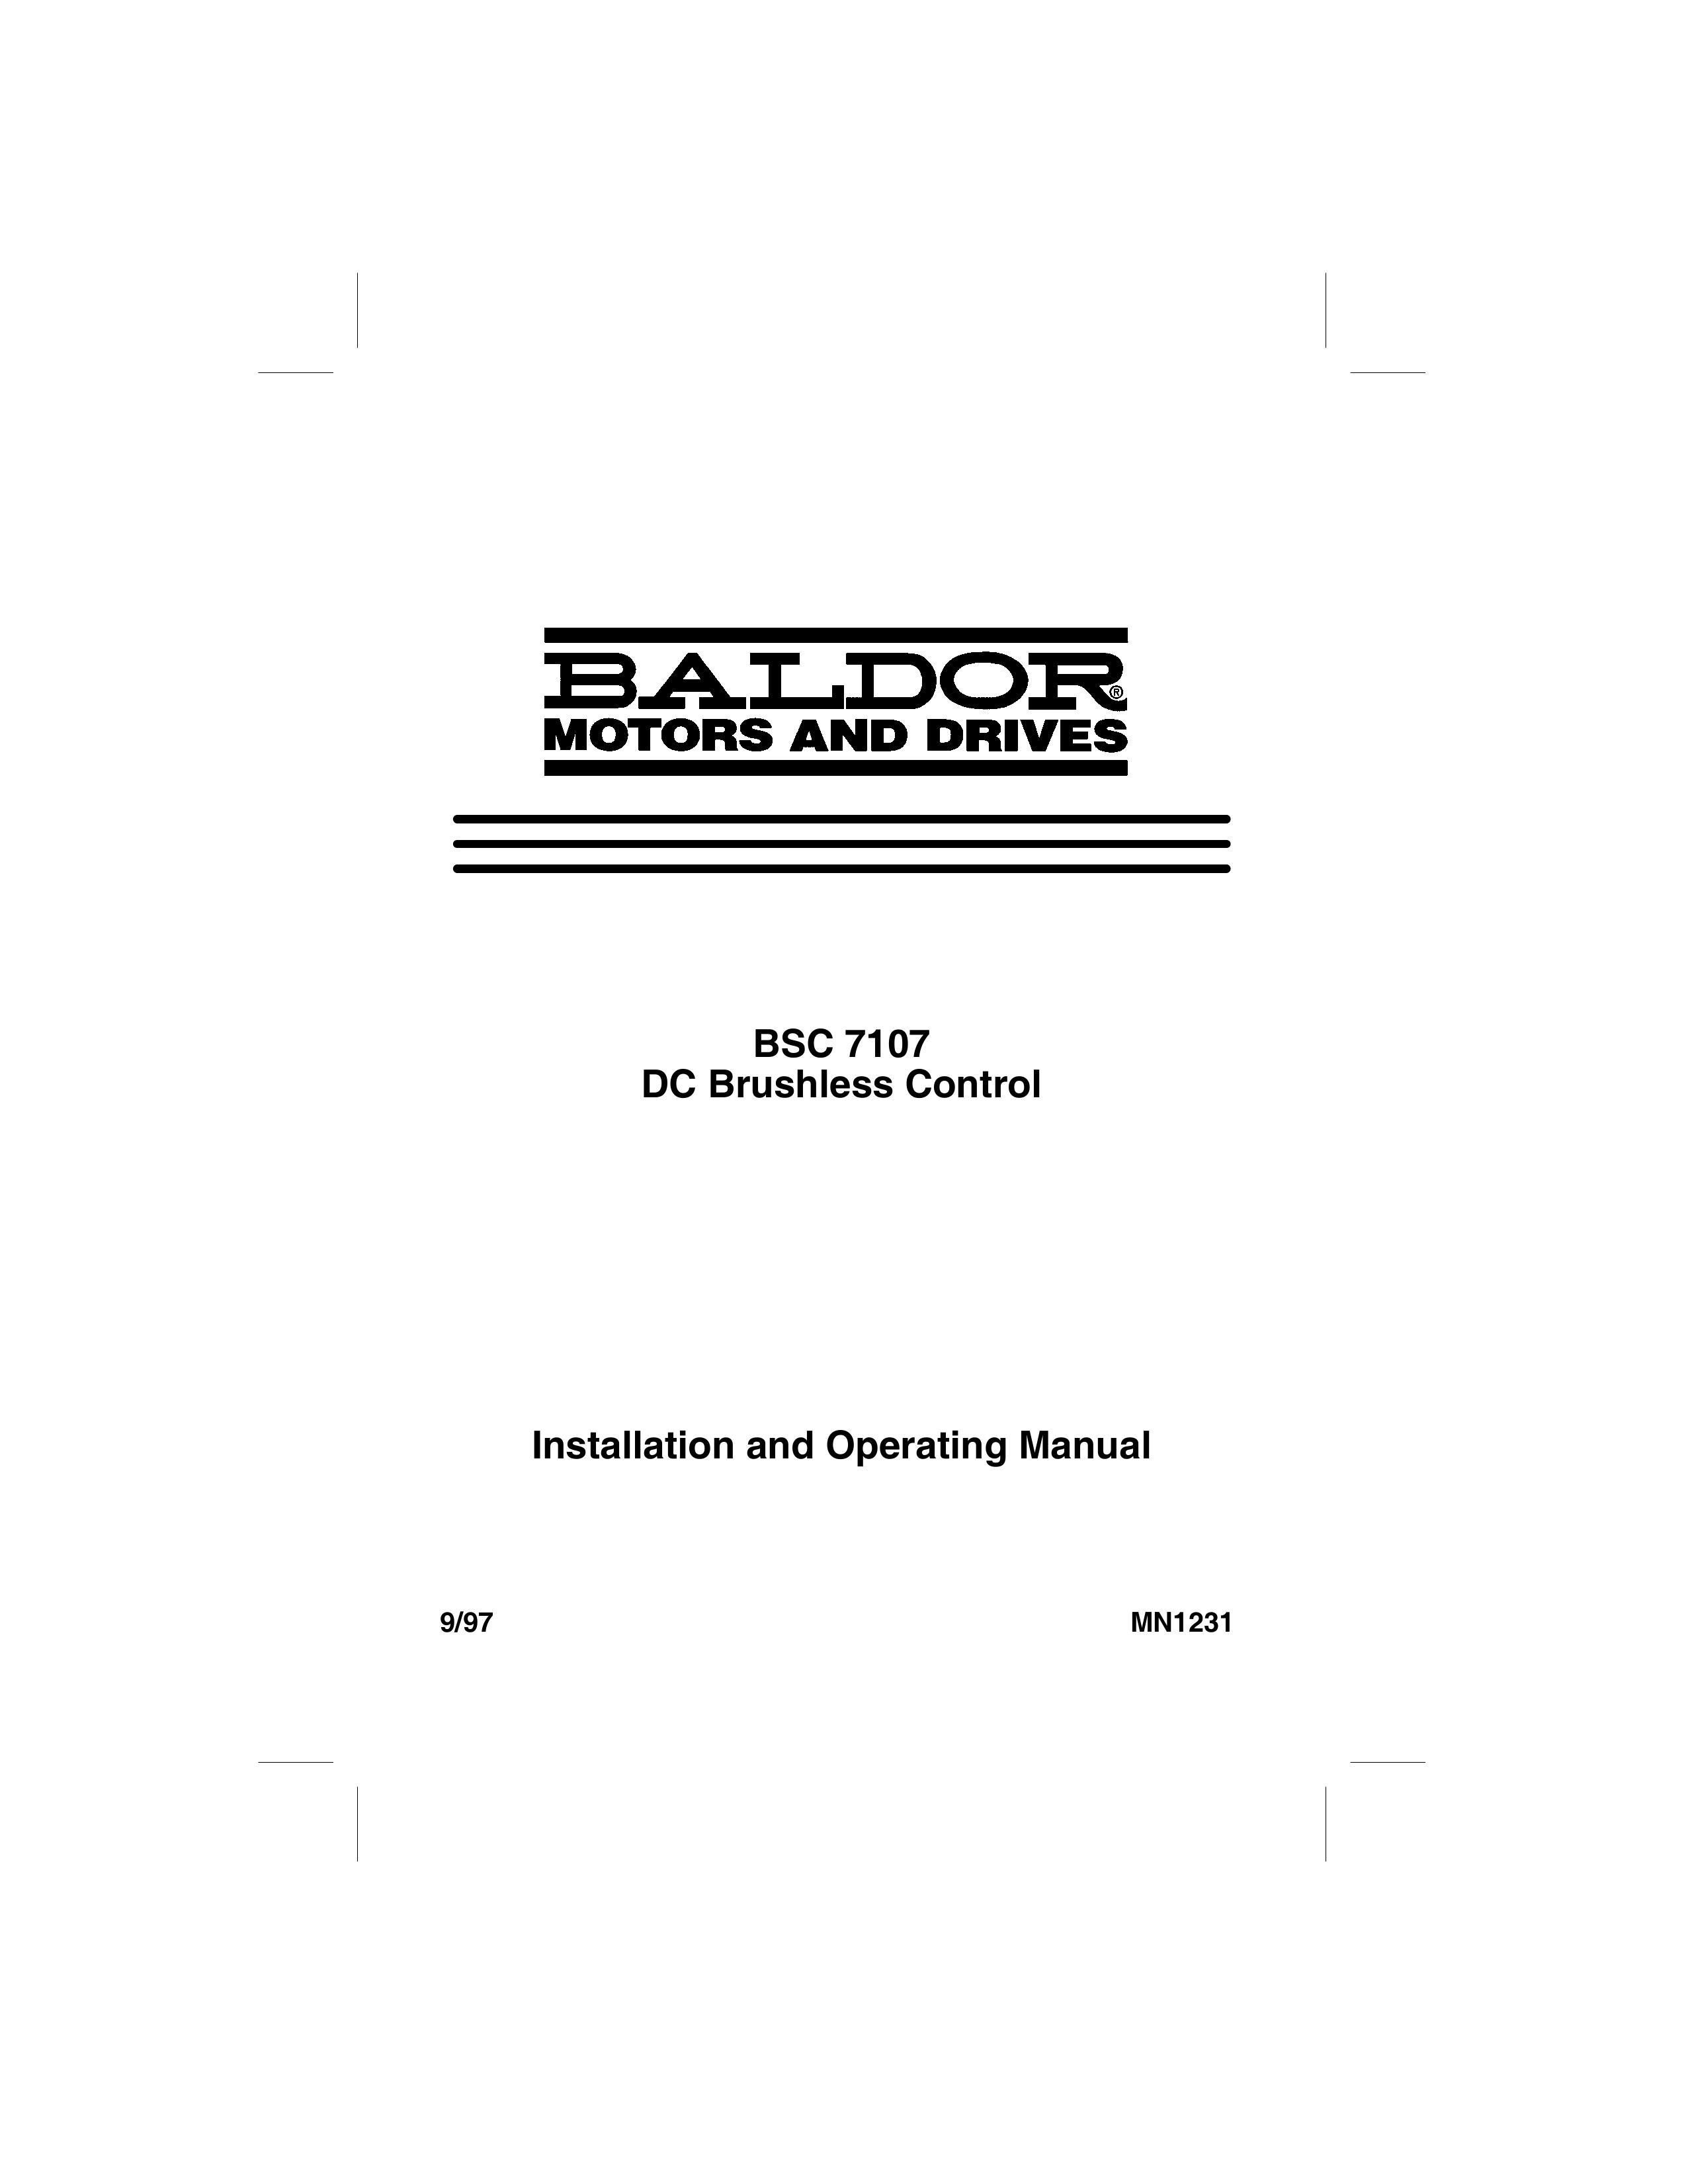 Baldor BSC 7107 DC Outboard Motor User Manual